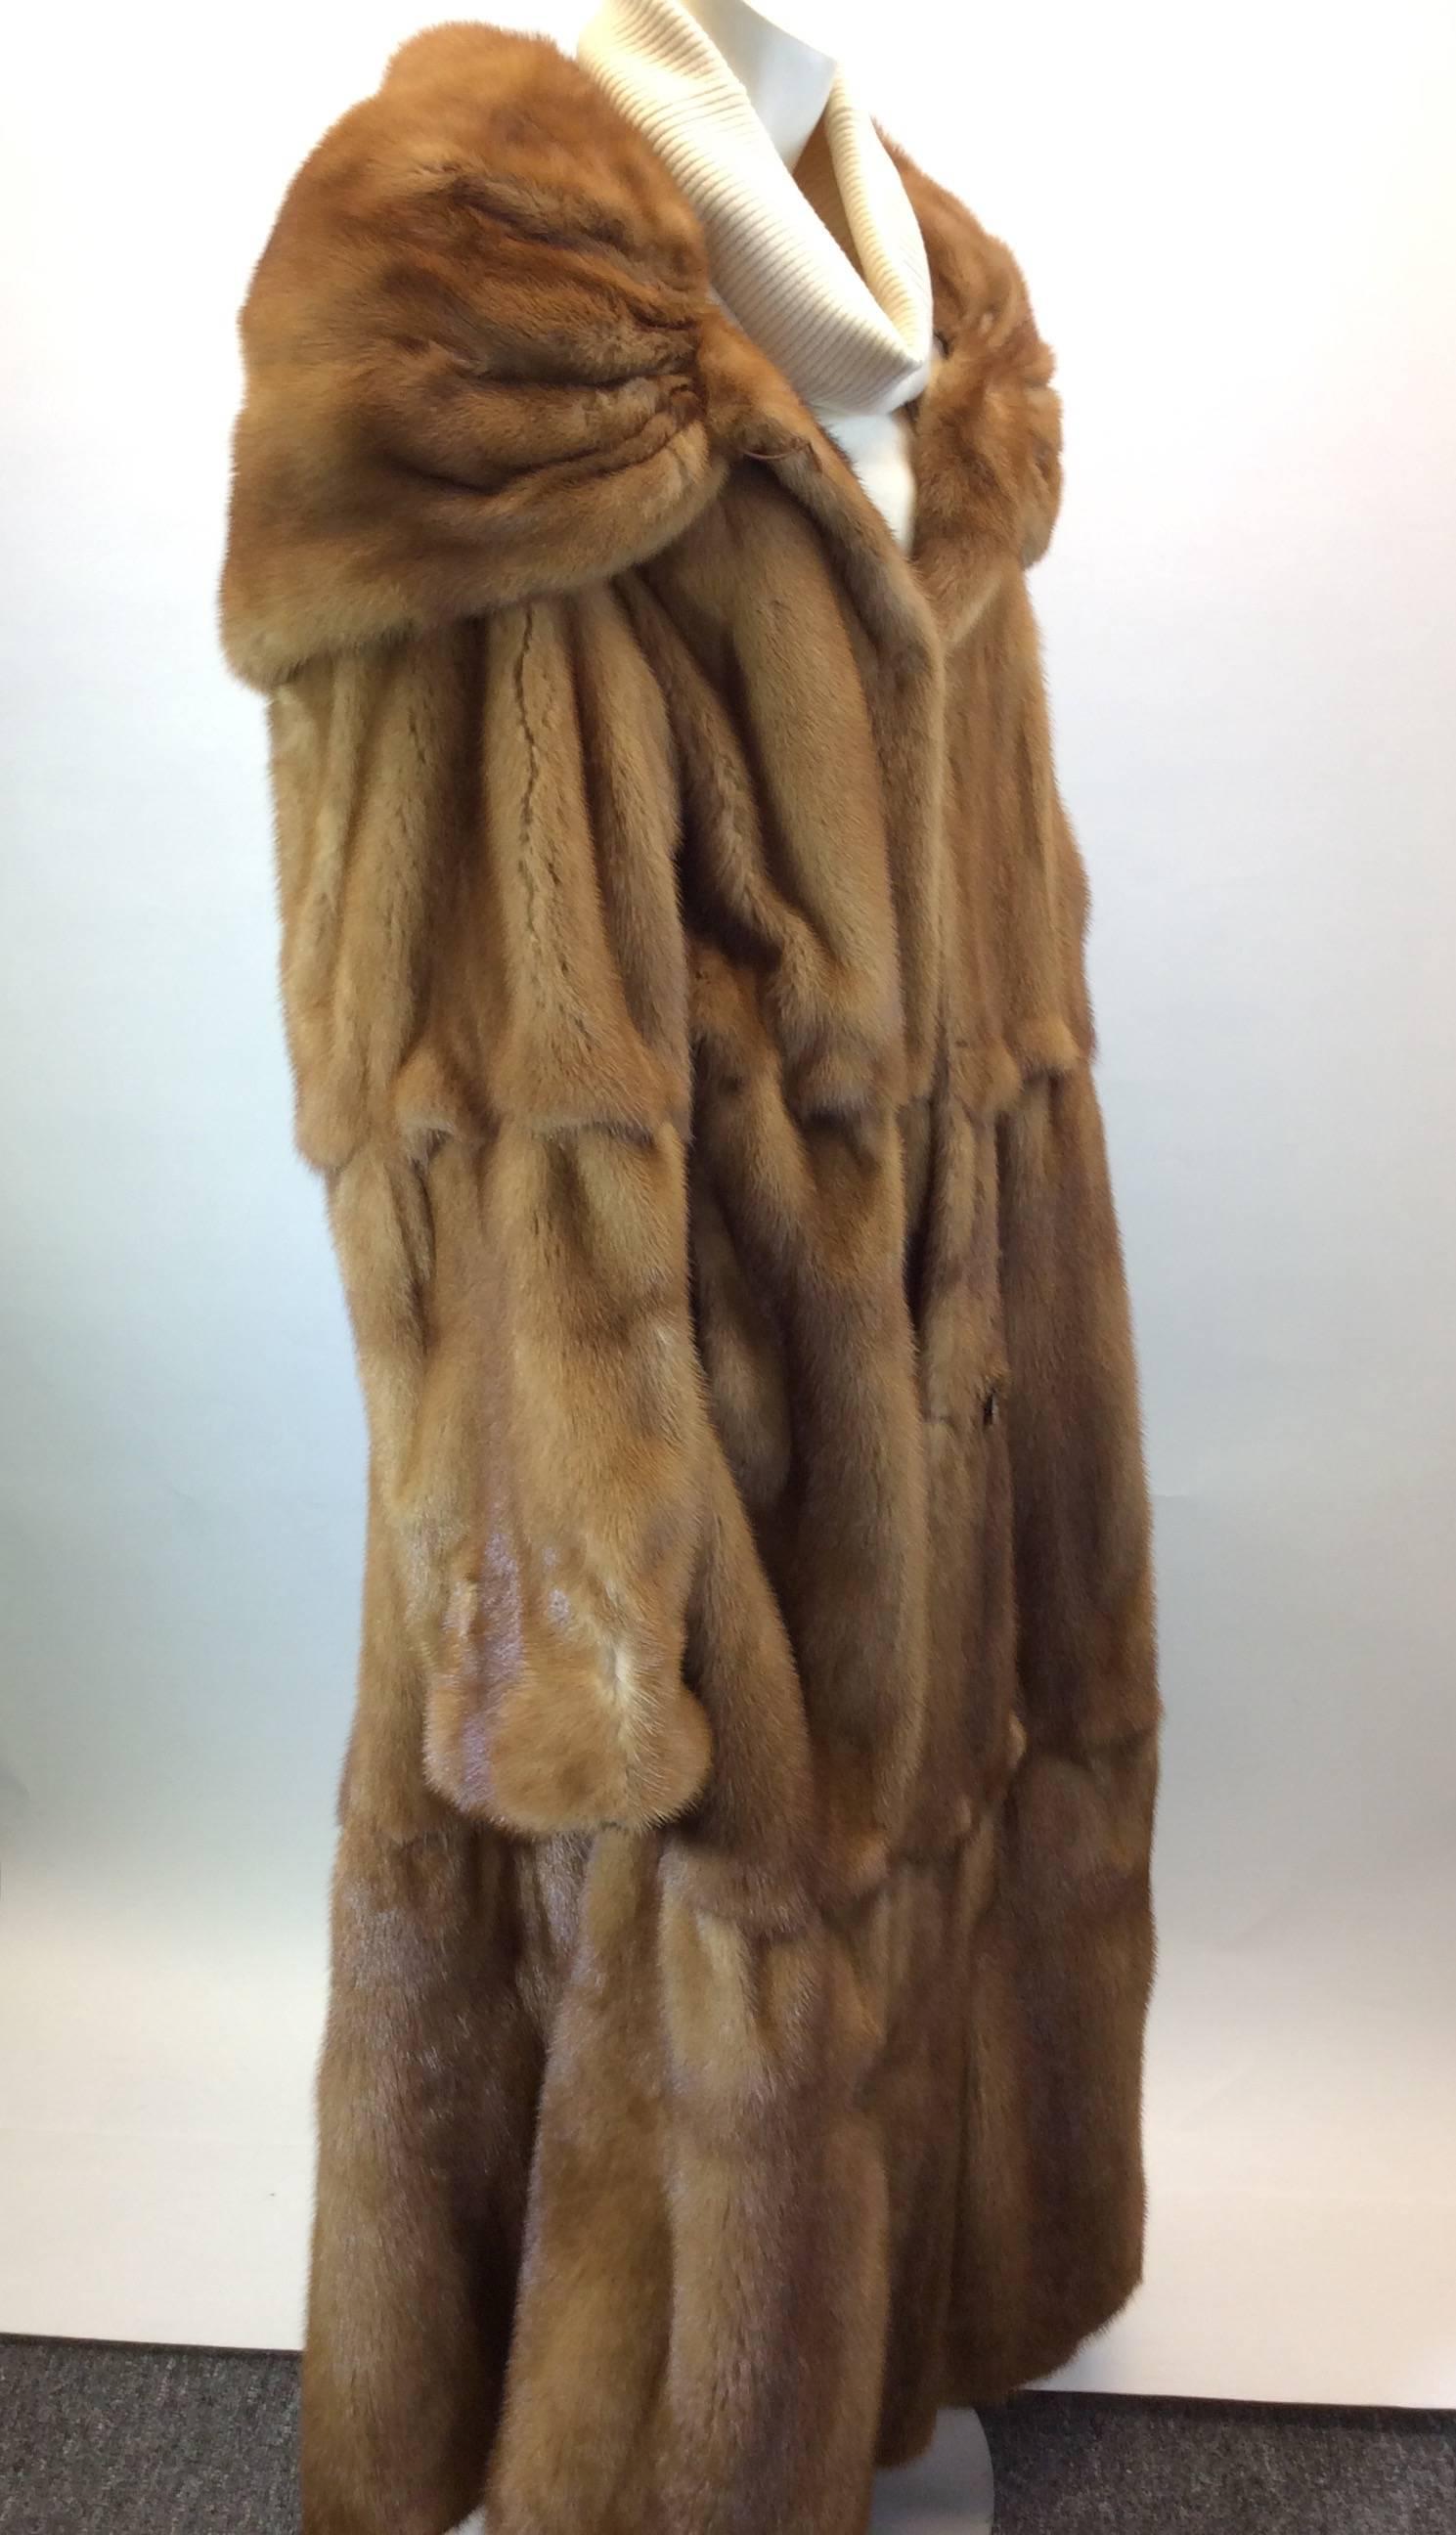 Custom Made Fur Coat
100% Genuine Mink
Hooded 
Sleeve Length: 28